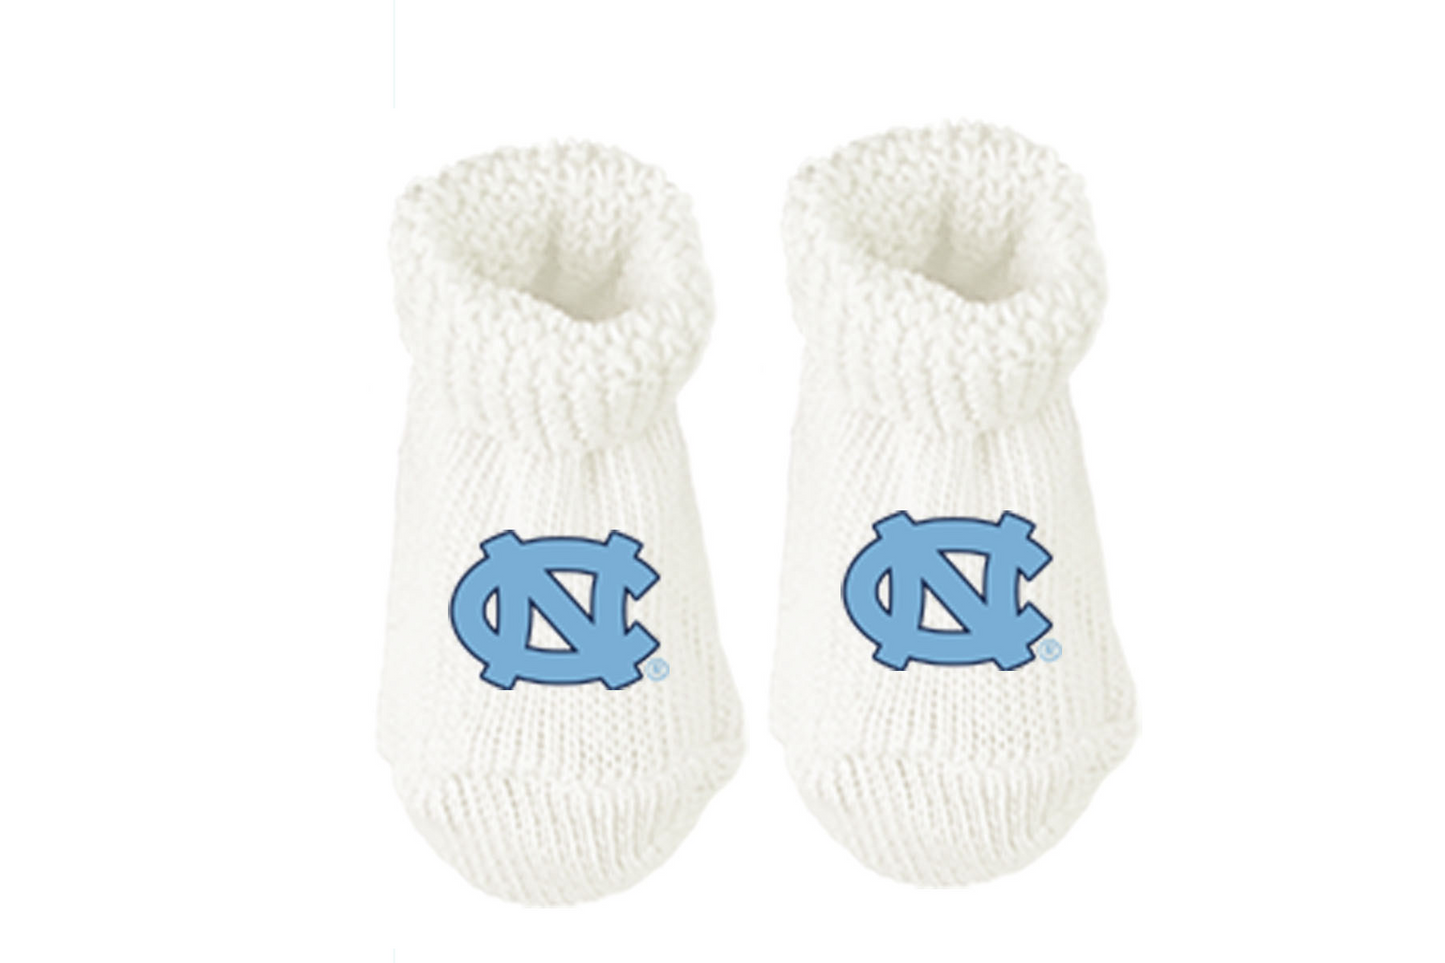 UNC New Born Baby Booties Socks Gift Box in Light Blue